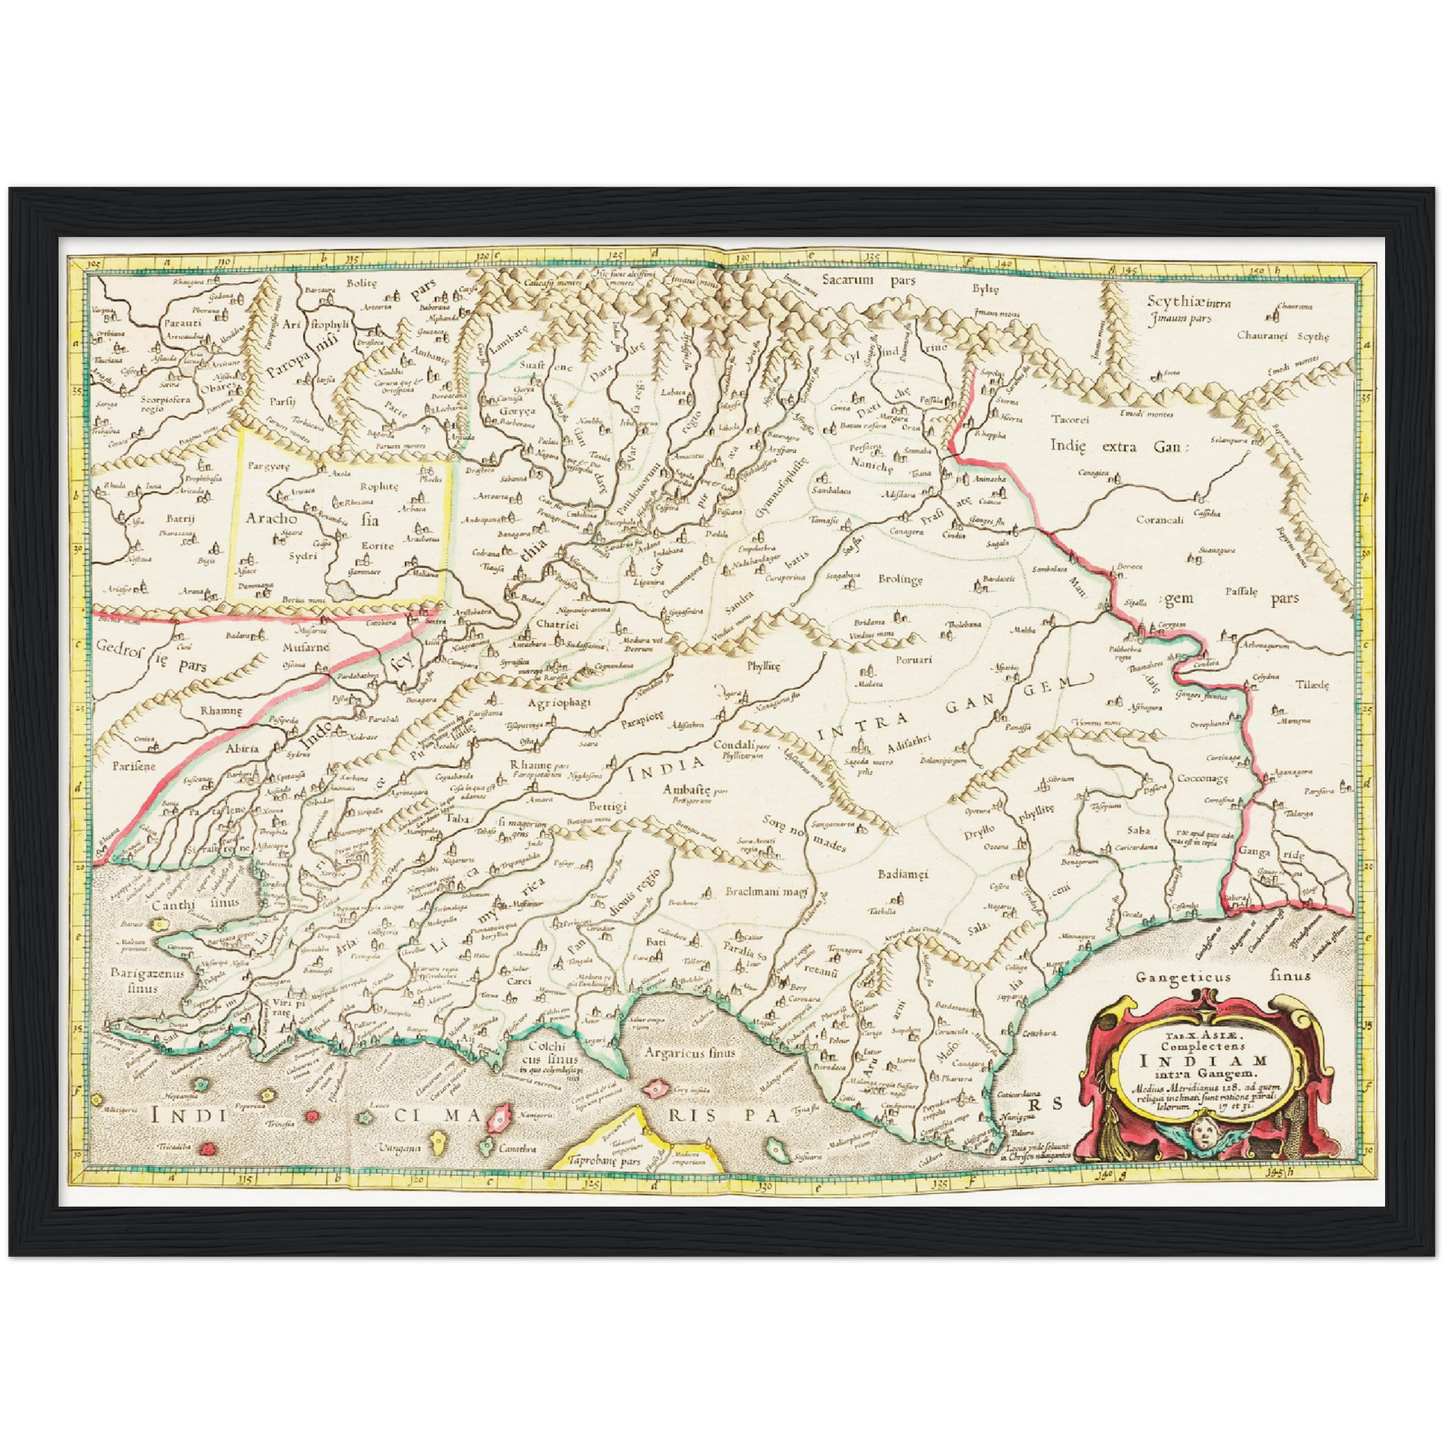 Historische Landkarte Indien um 1704